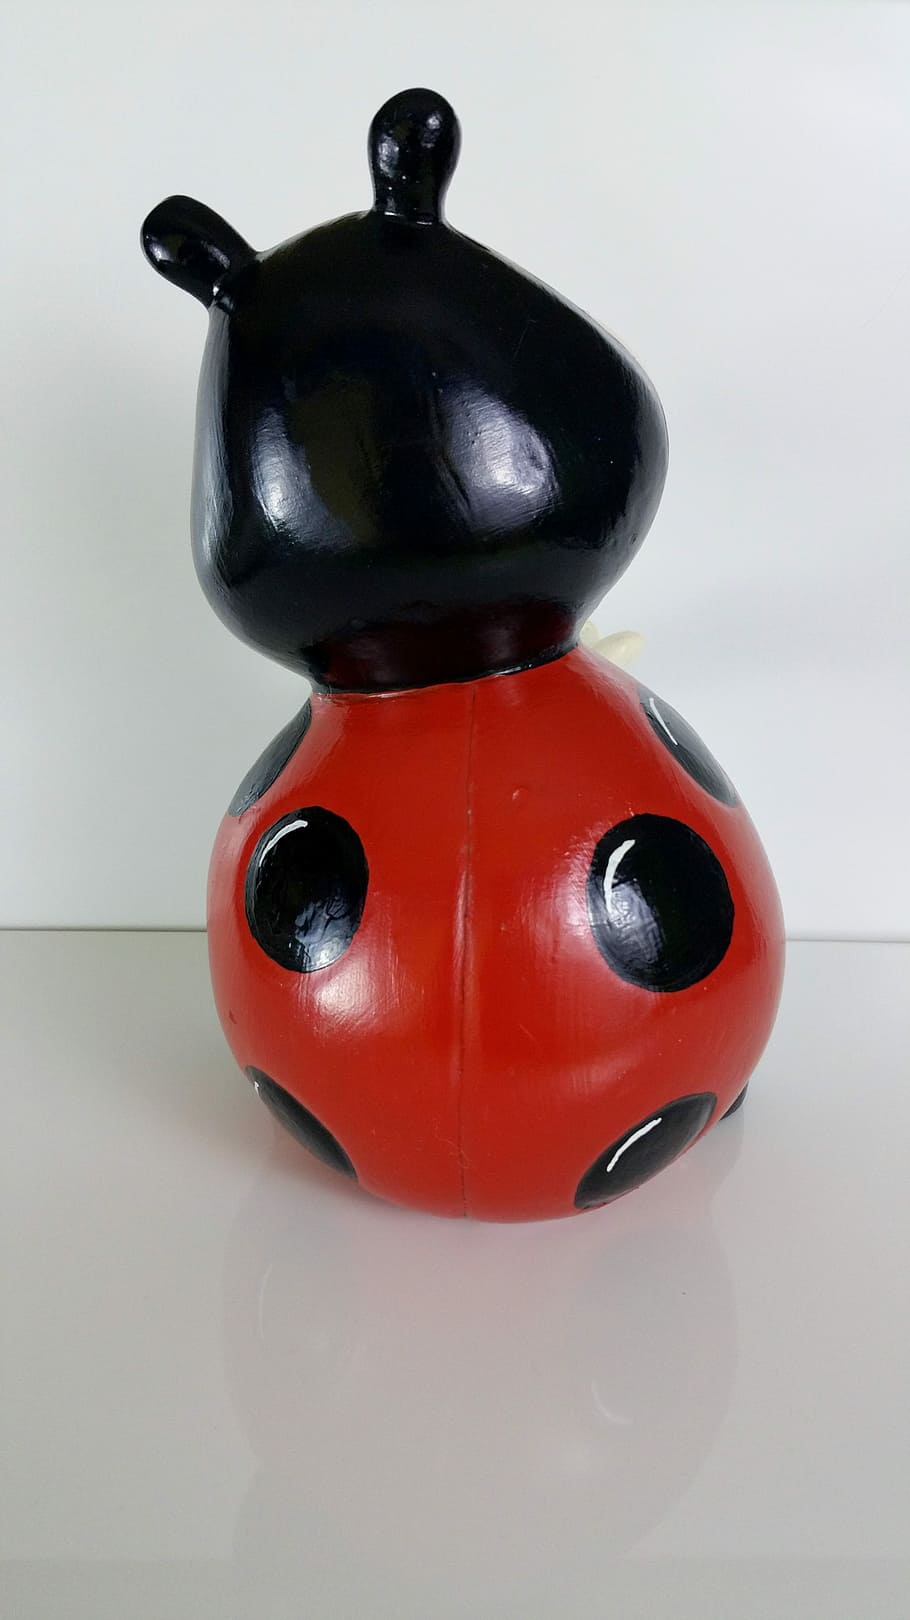 Ladybug, Sweet, Lucky, funny, lucky ladybug, ceramic, red, close-up, indoors, day